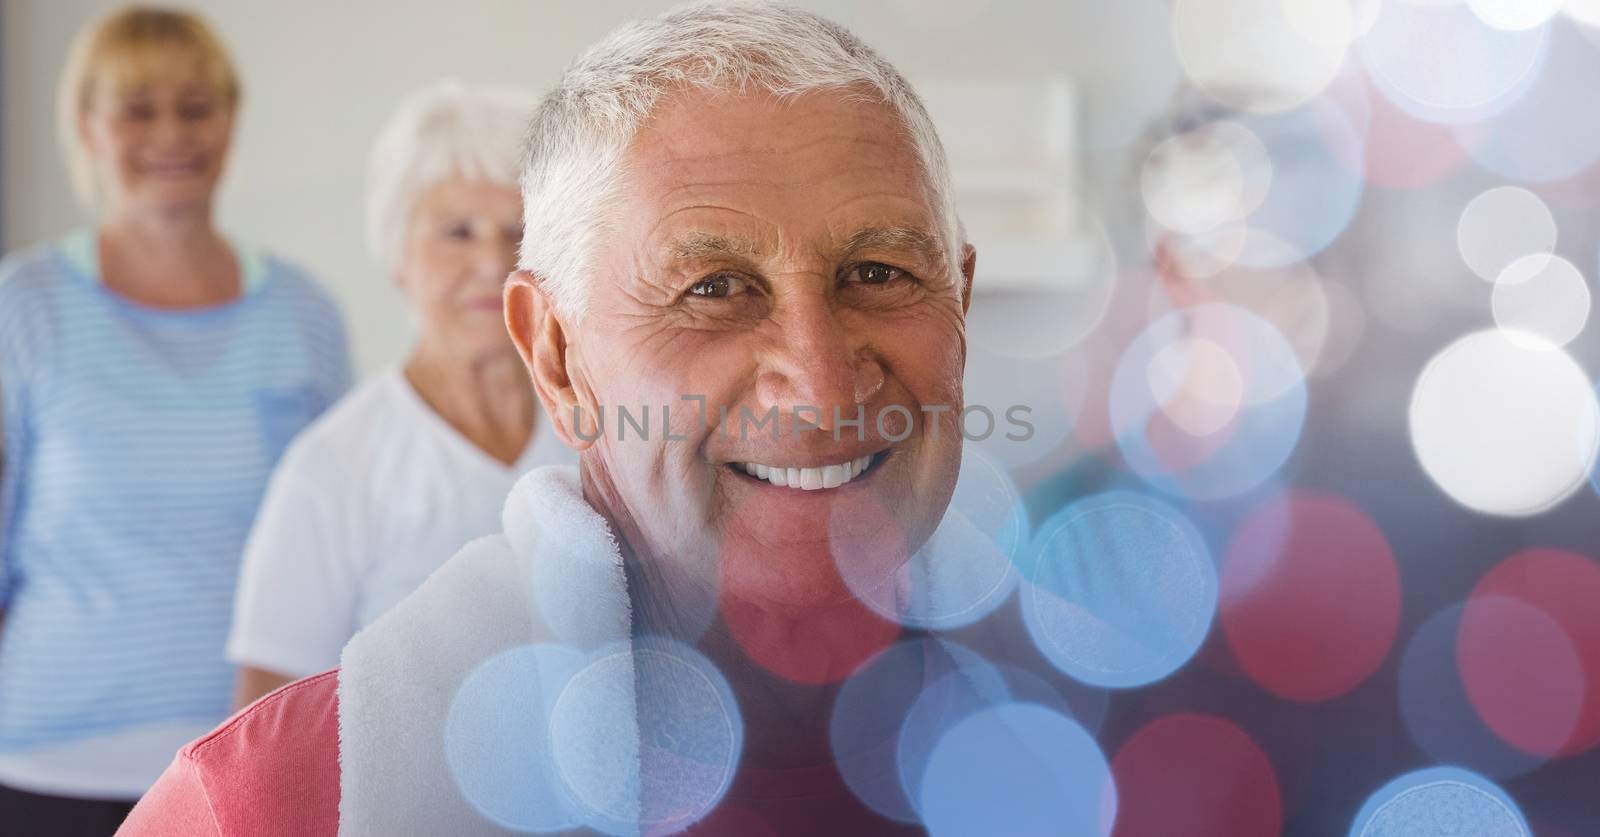 Smiling senior man with friends in yoga class by Wavebreakmedia